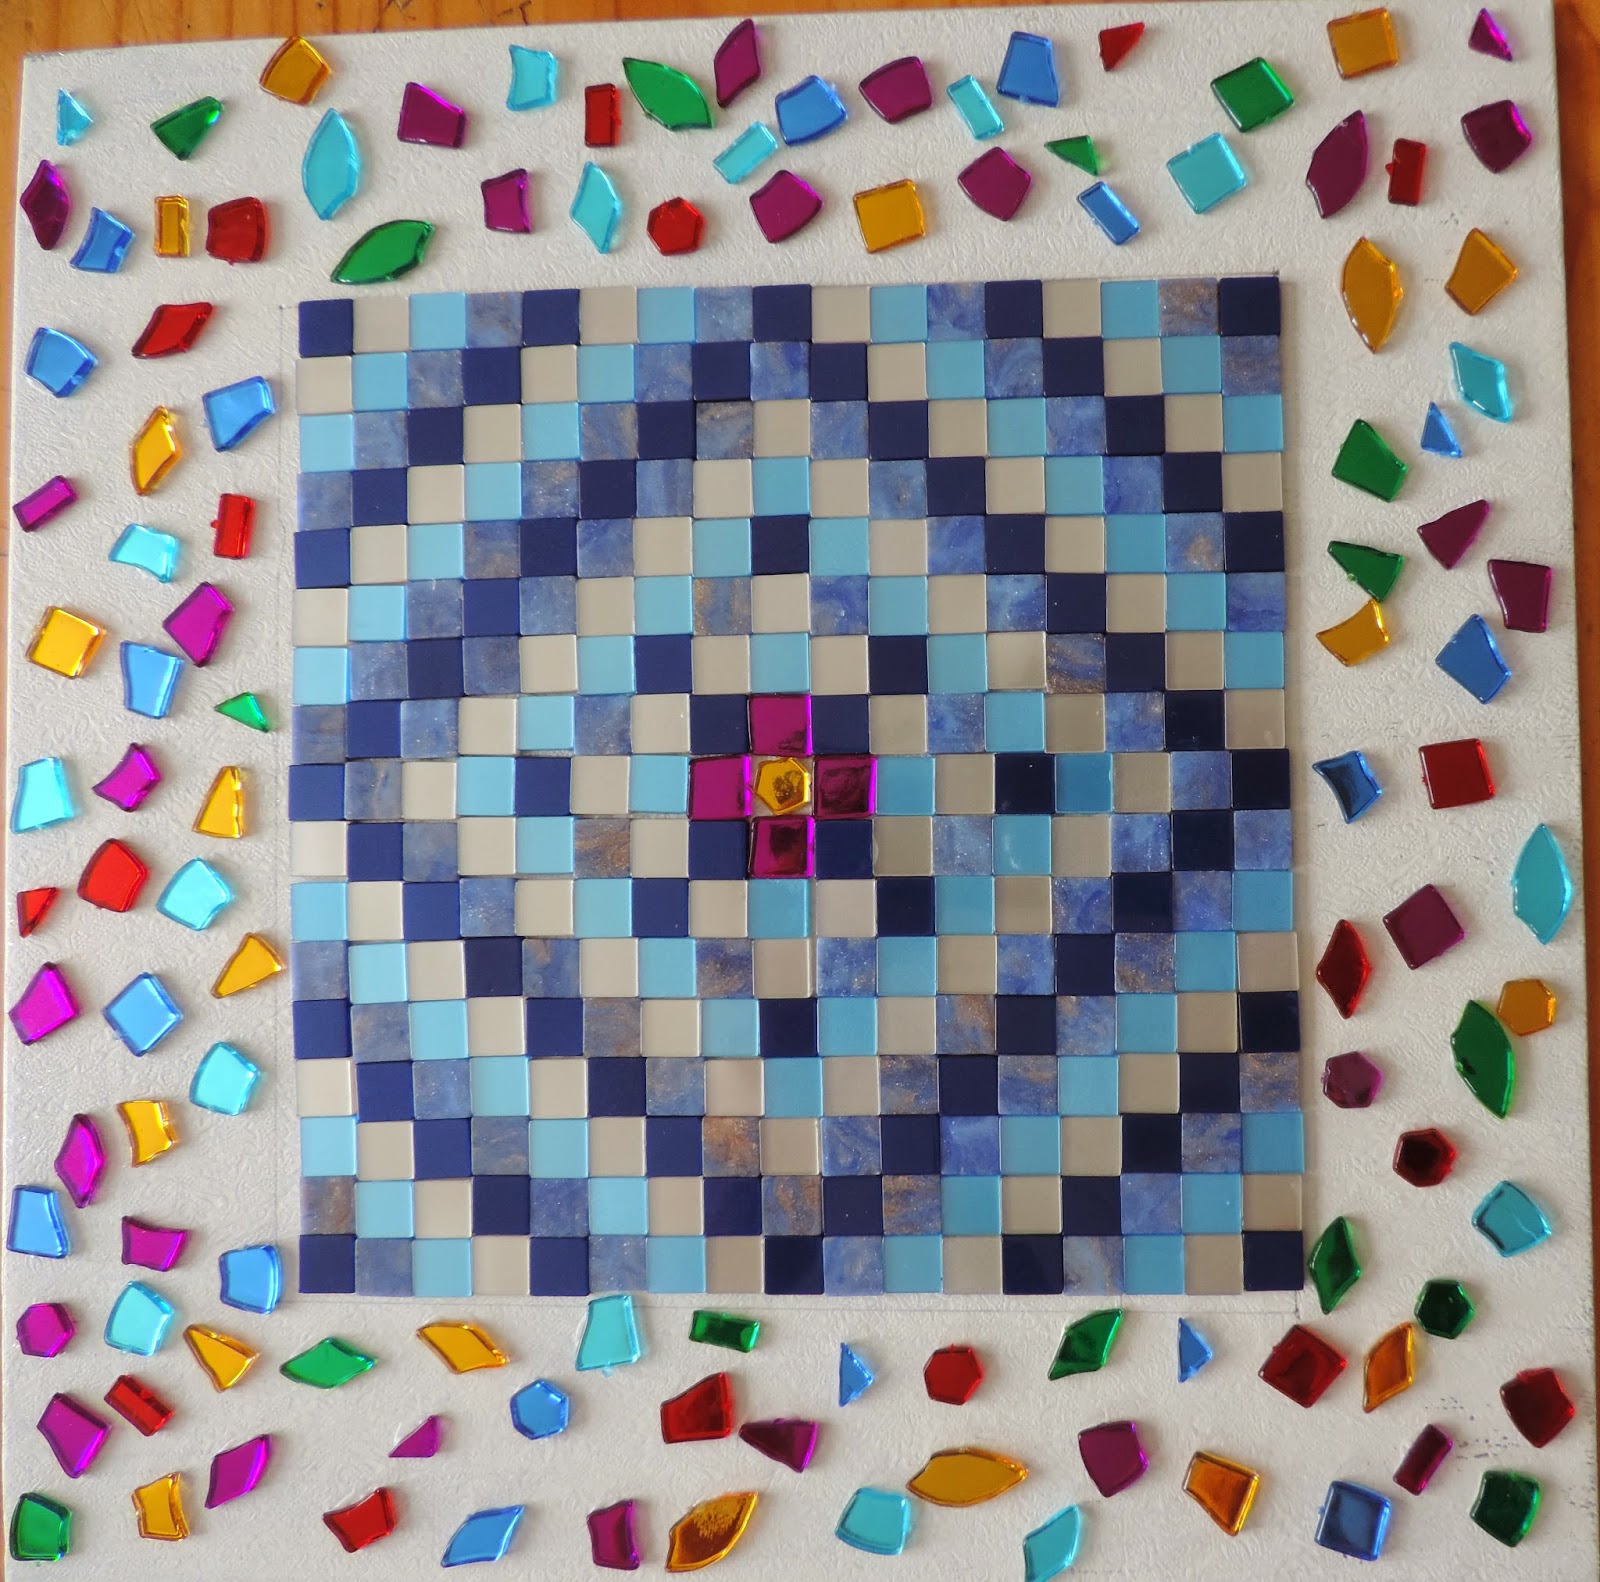 hobbycraft mosaic tessellated design